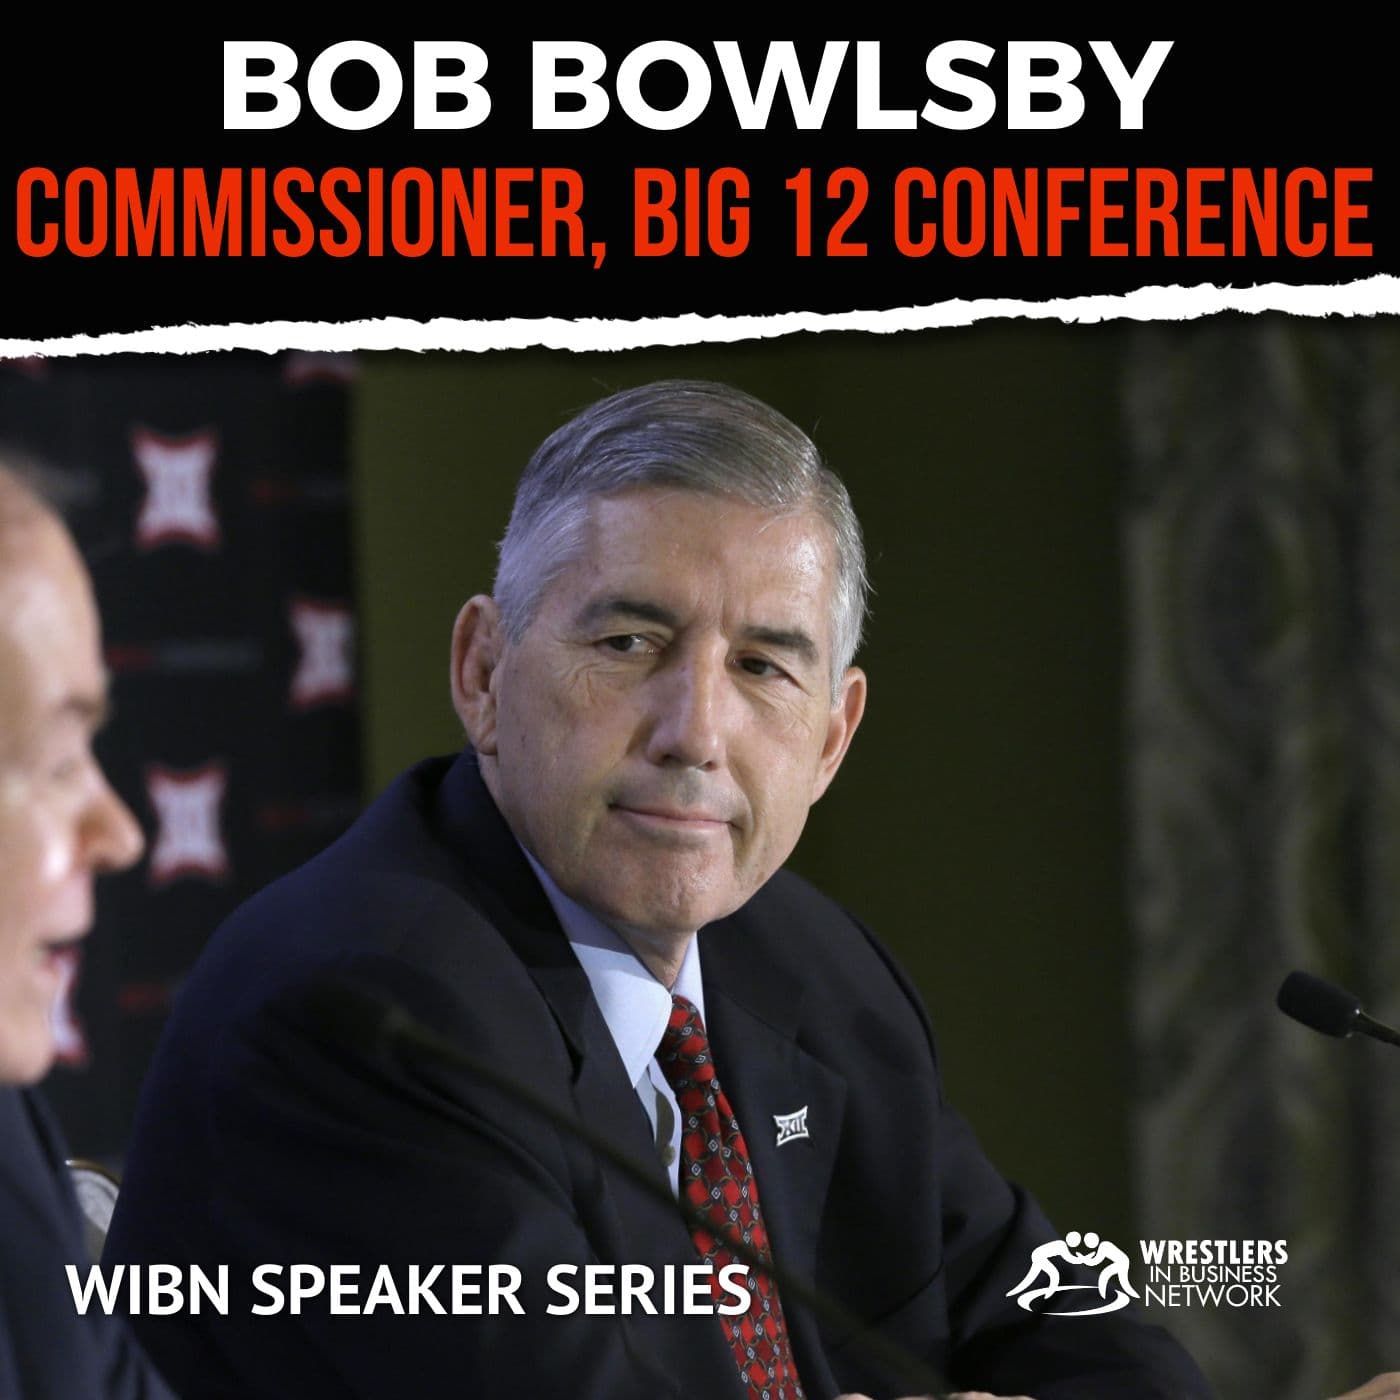 WIBN Speaker Series: Big 12 Commissioner Bob Bowlsby